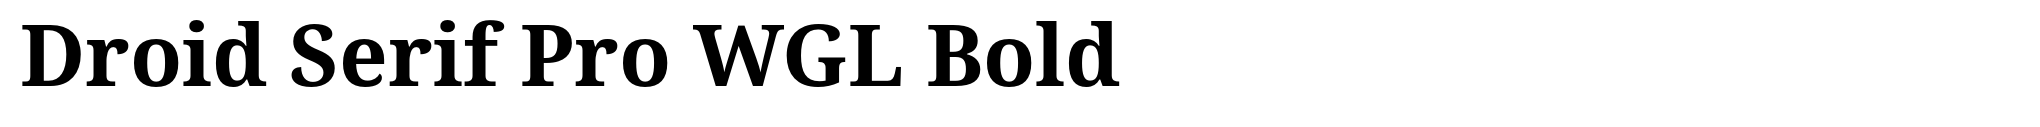 Droid Serif Pro WGL Bold image